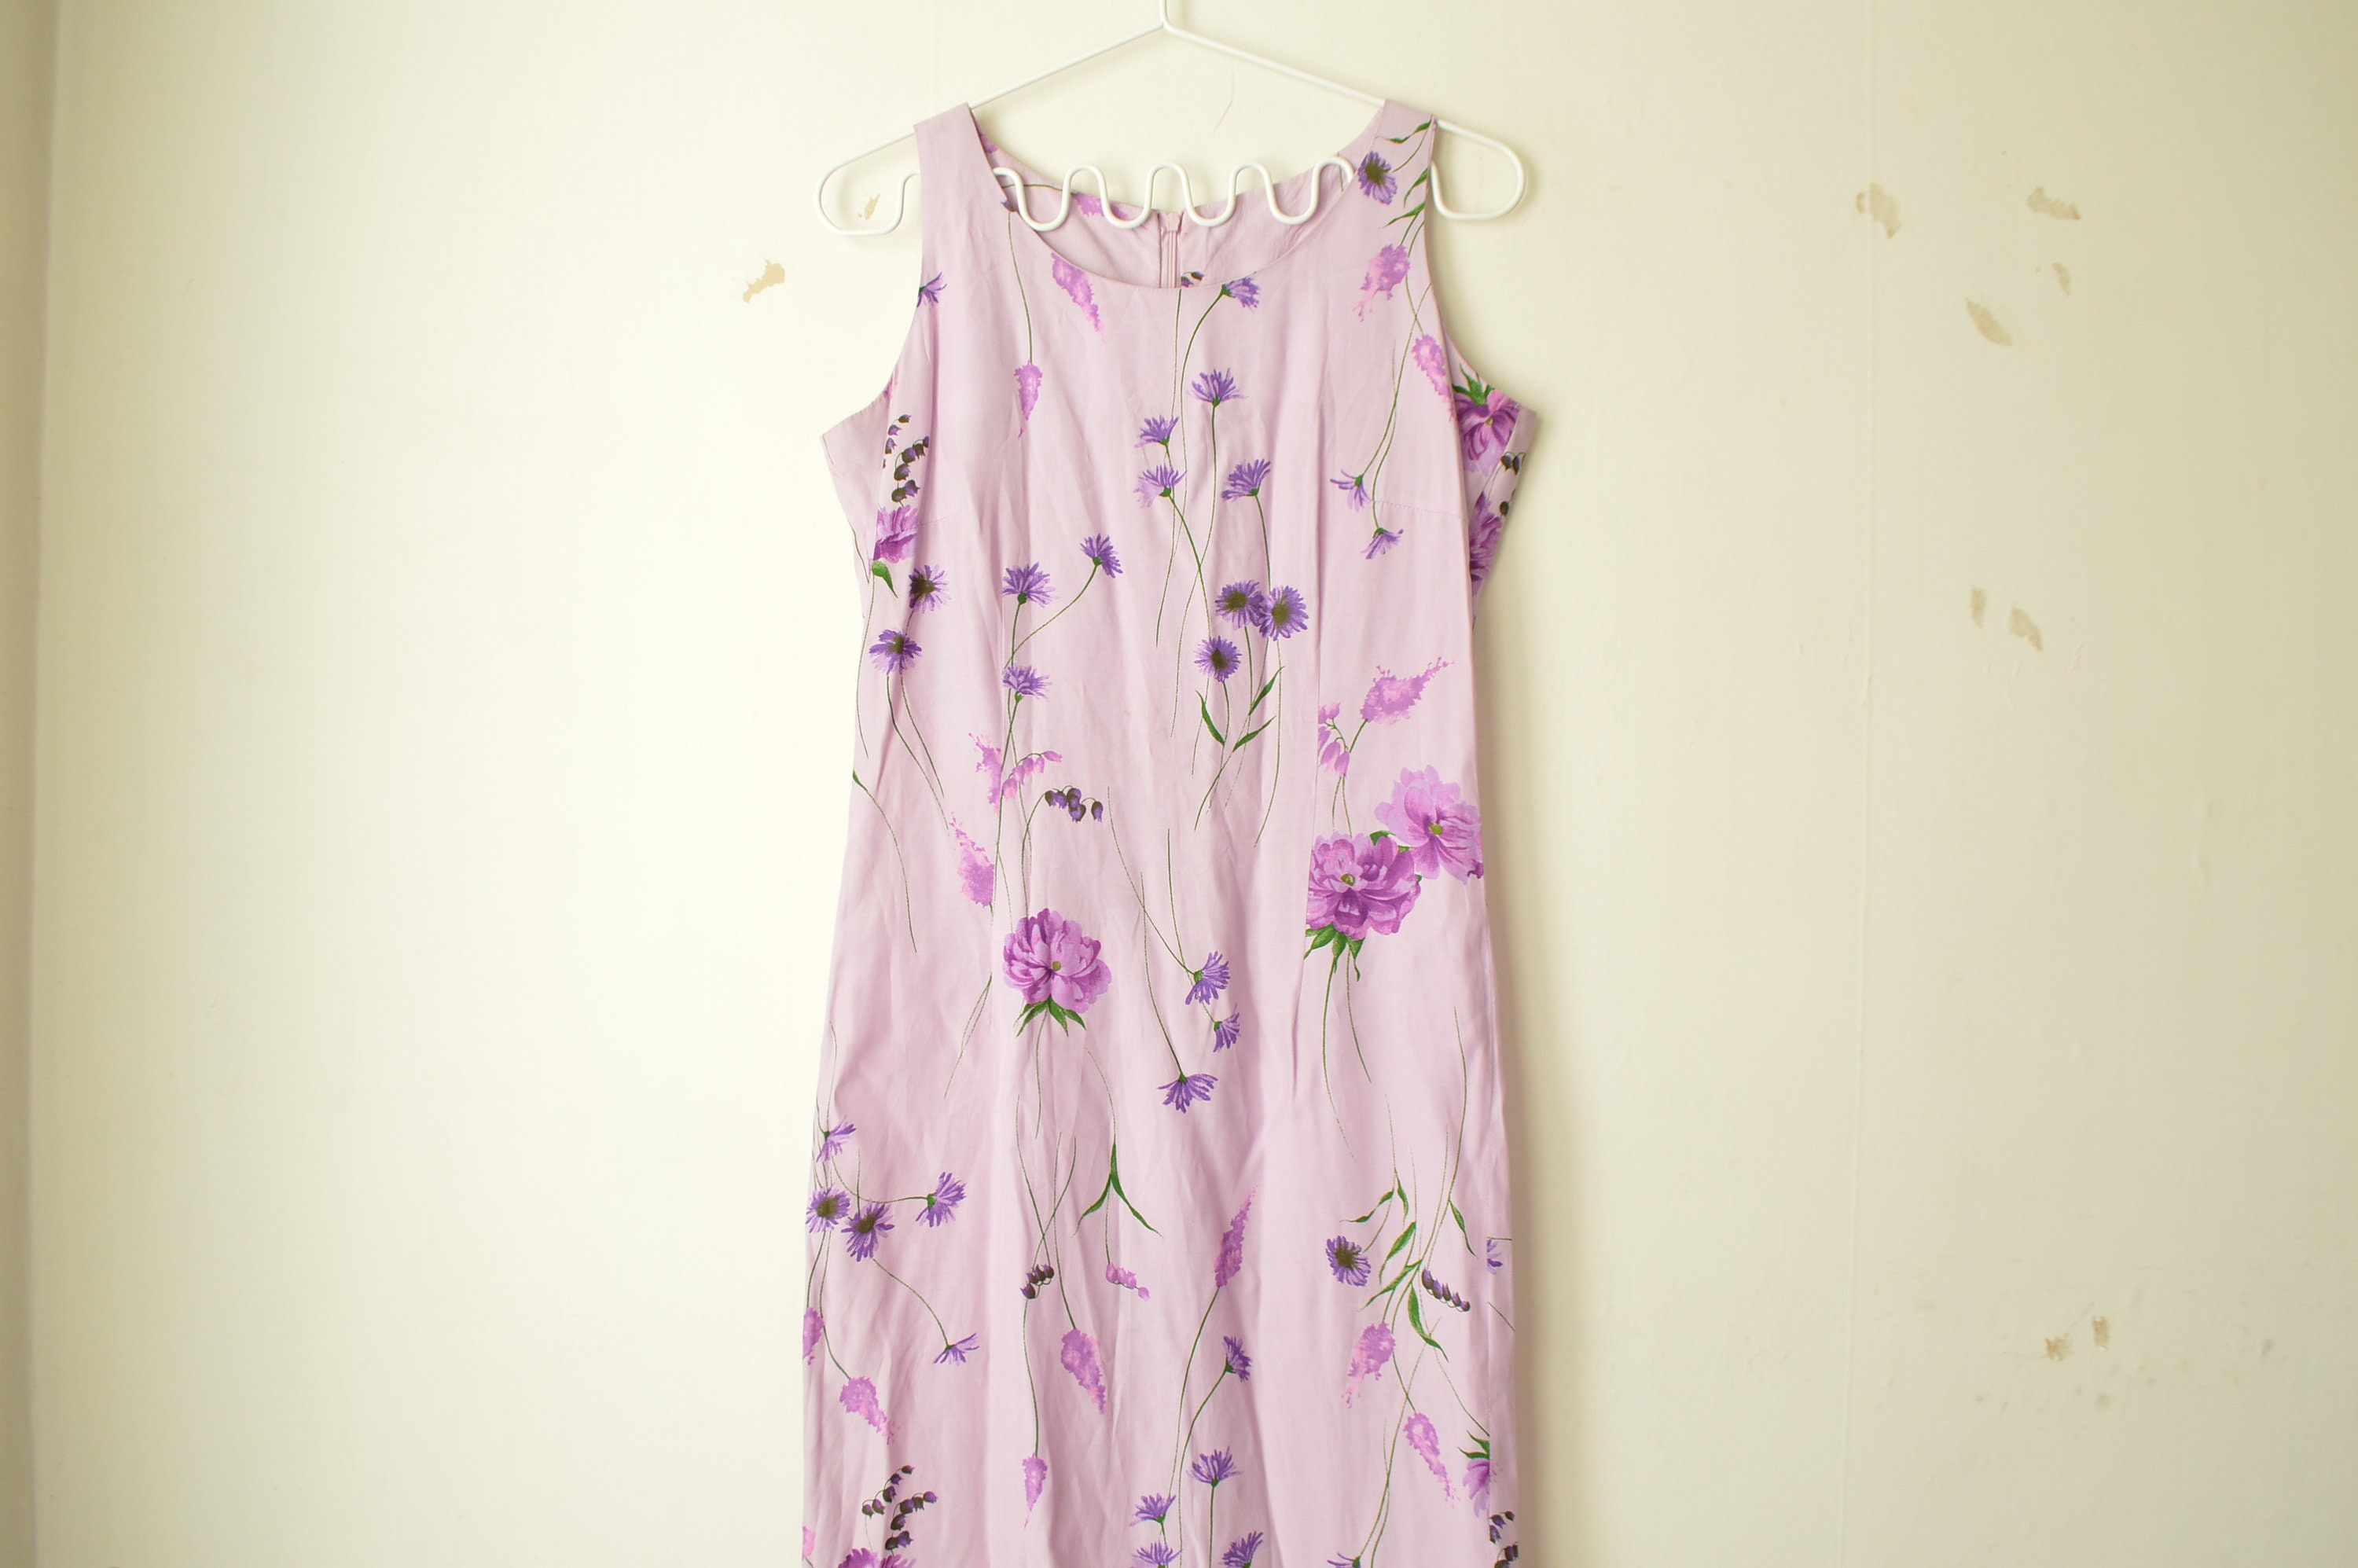 Handmade vintage zipper back brown/purple floral shift maxi dress size Large or